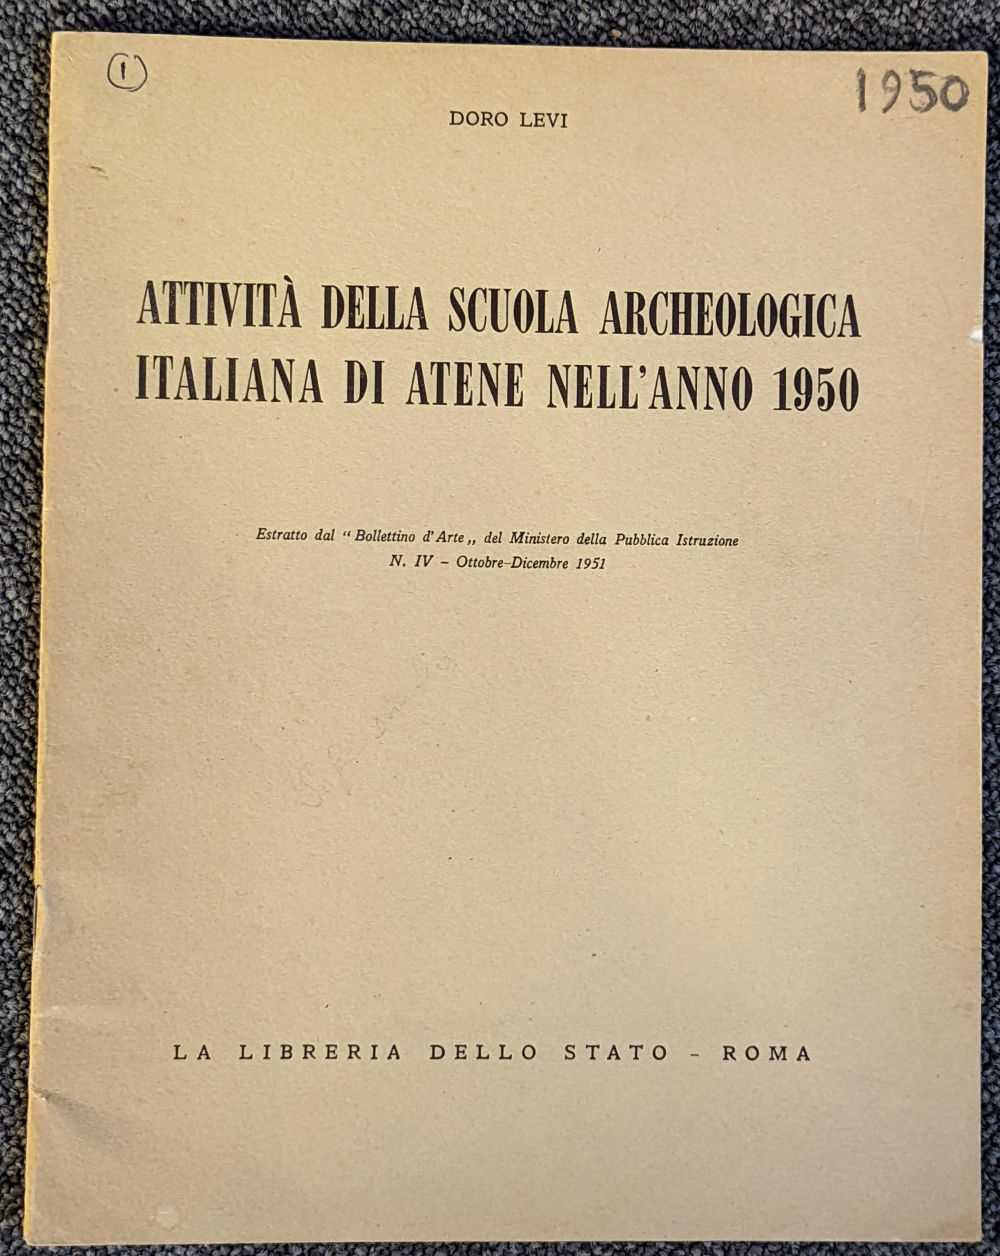 Lot 272 - Pernier (Luigi). Il Palazzo Minoico di Festos, 2 volumes, 1935-51